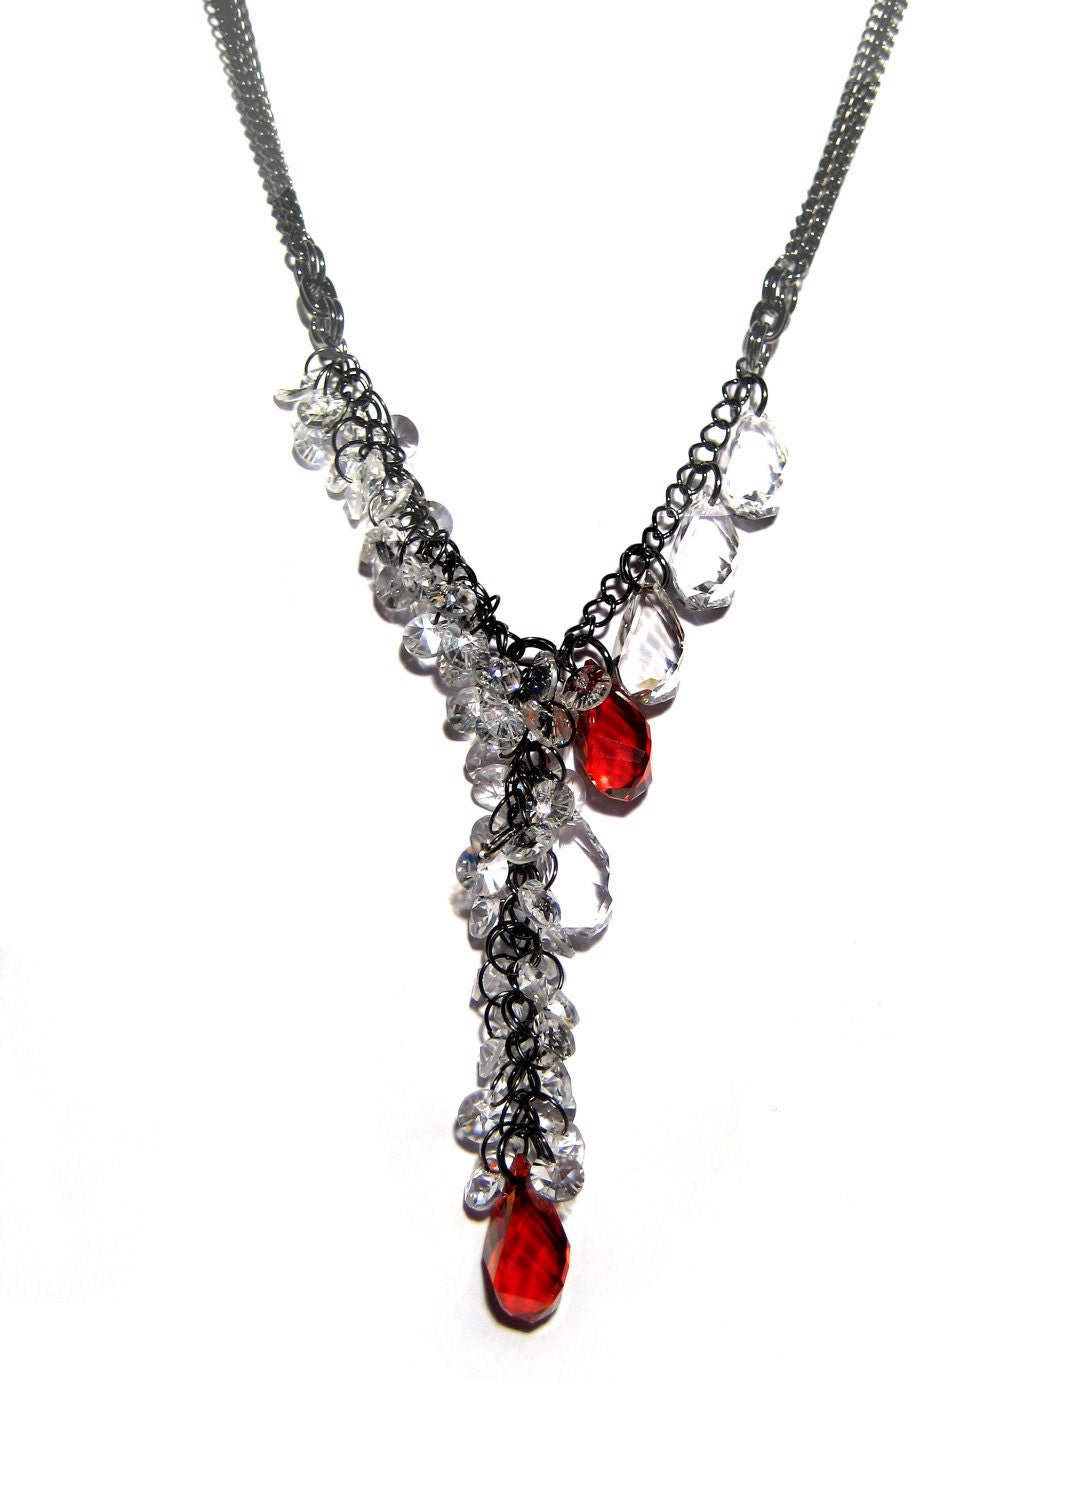 Swarovski crystal 18mm Helix pendant with gunmetal statement necklace